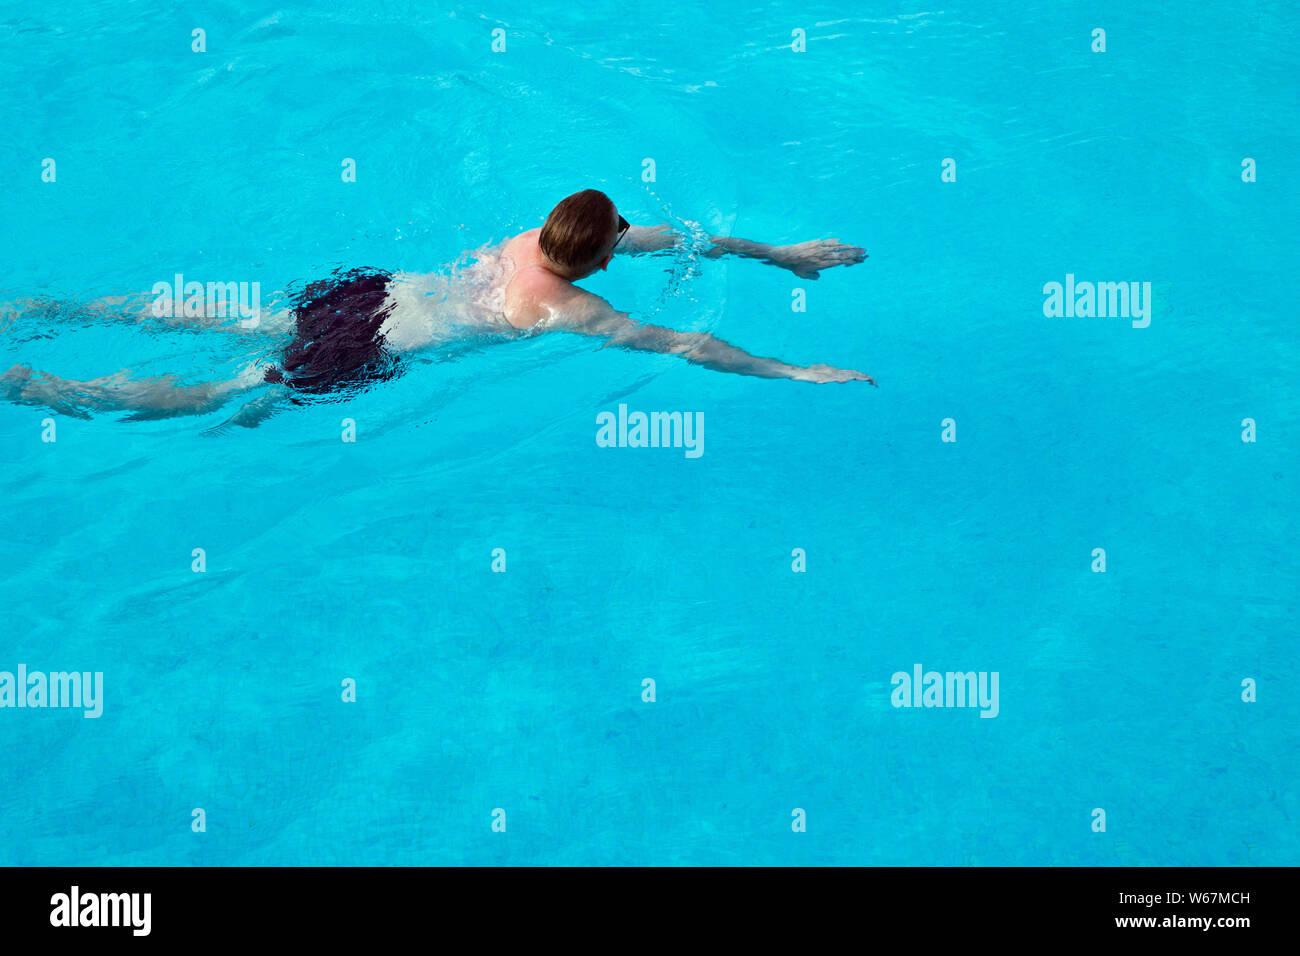 man in swimming pool wearing sunglasses Stock Photo